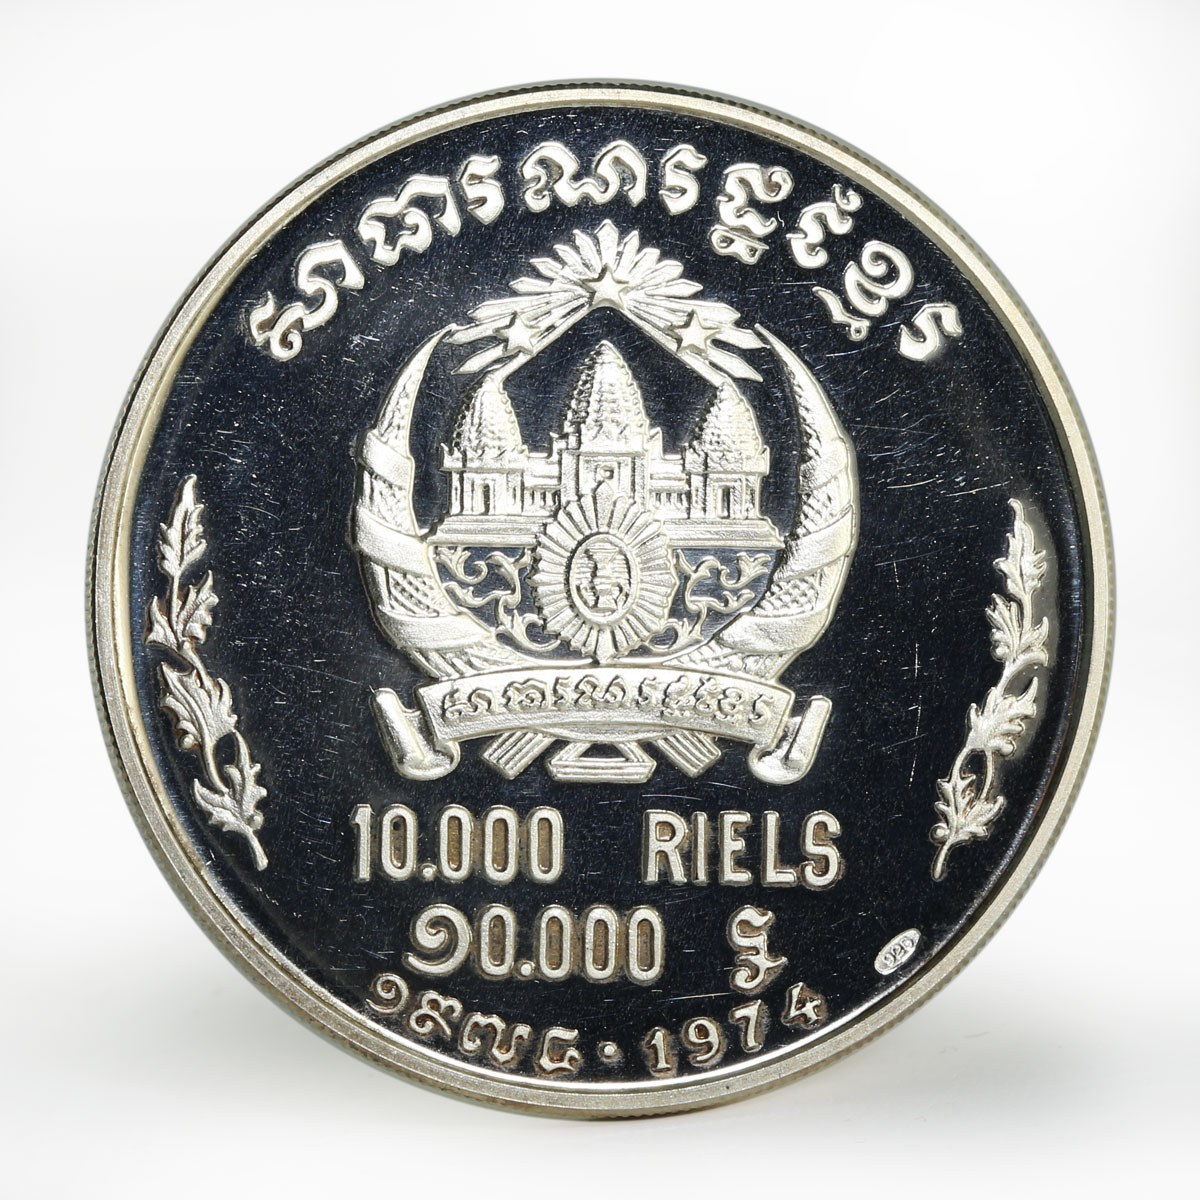 Cambodia 10000 riels Republique Khemer proof silver coin 1974